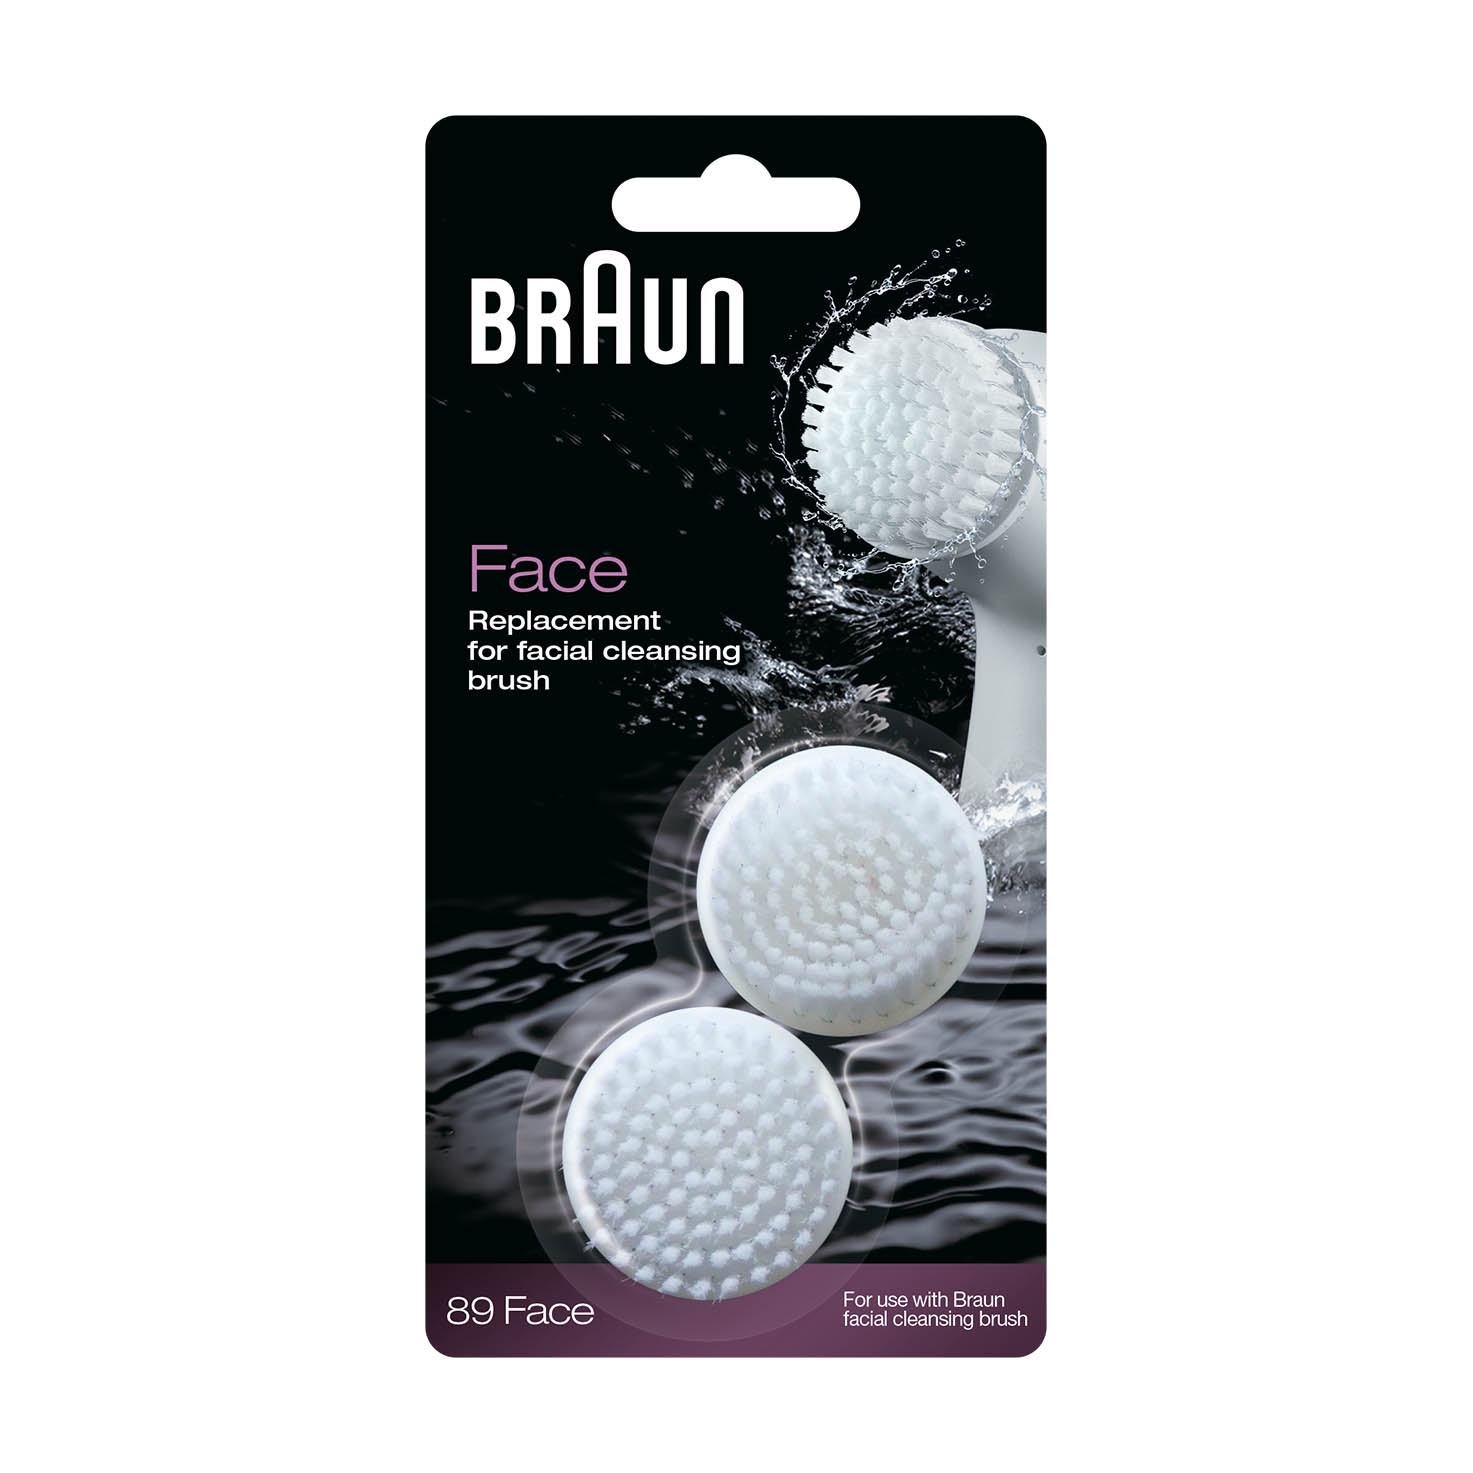 Braun facial cleansing brush refill duo pack